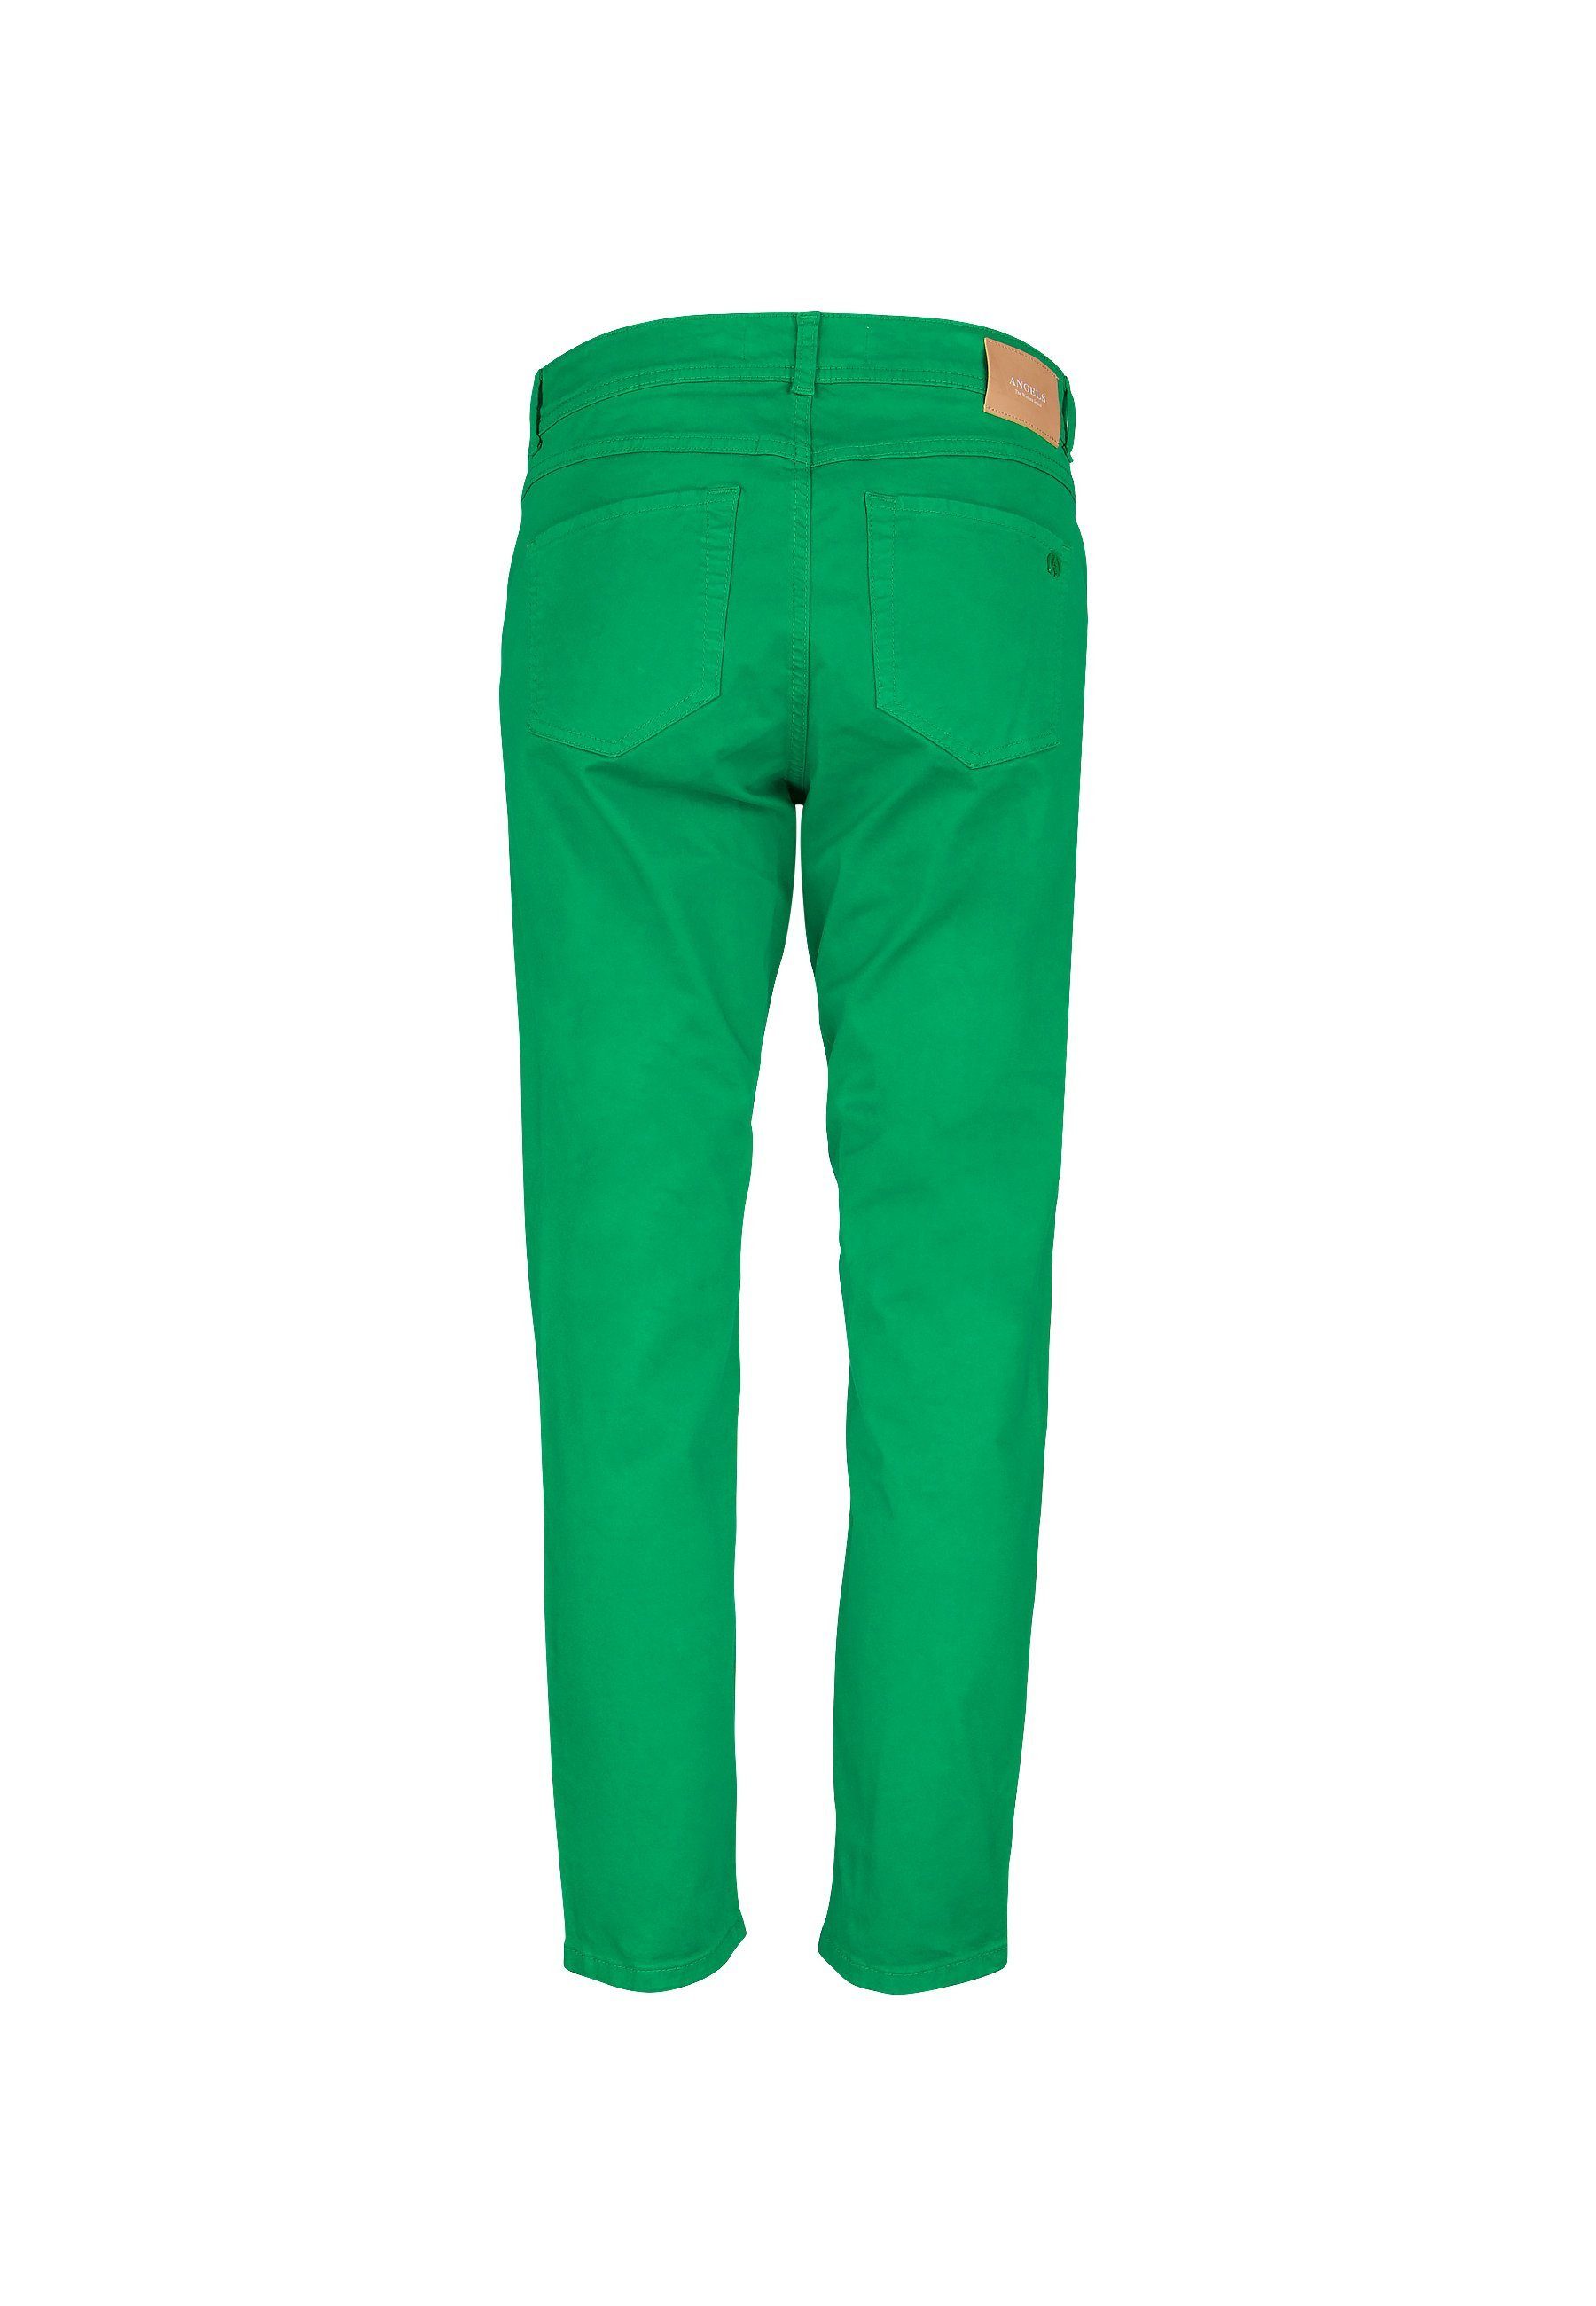 Ornella mit grün 7/8-Jeans Coloured Label-Applikationen ANGELS Jeans